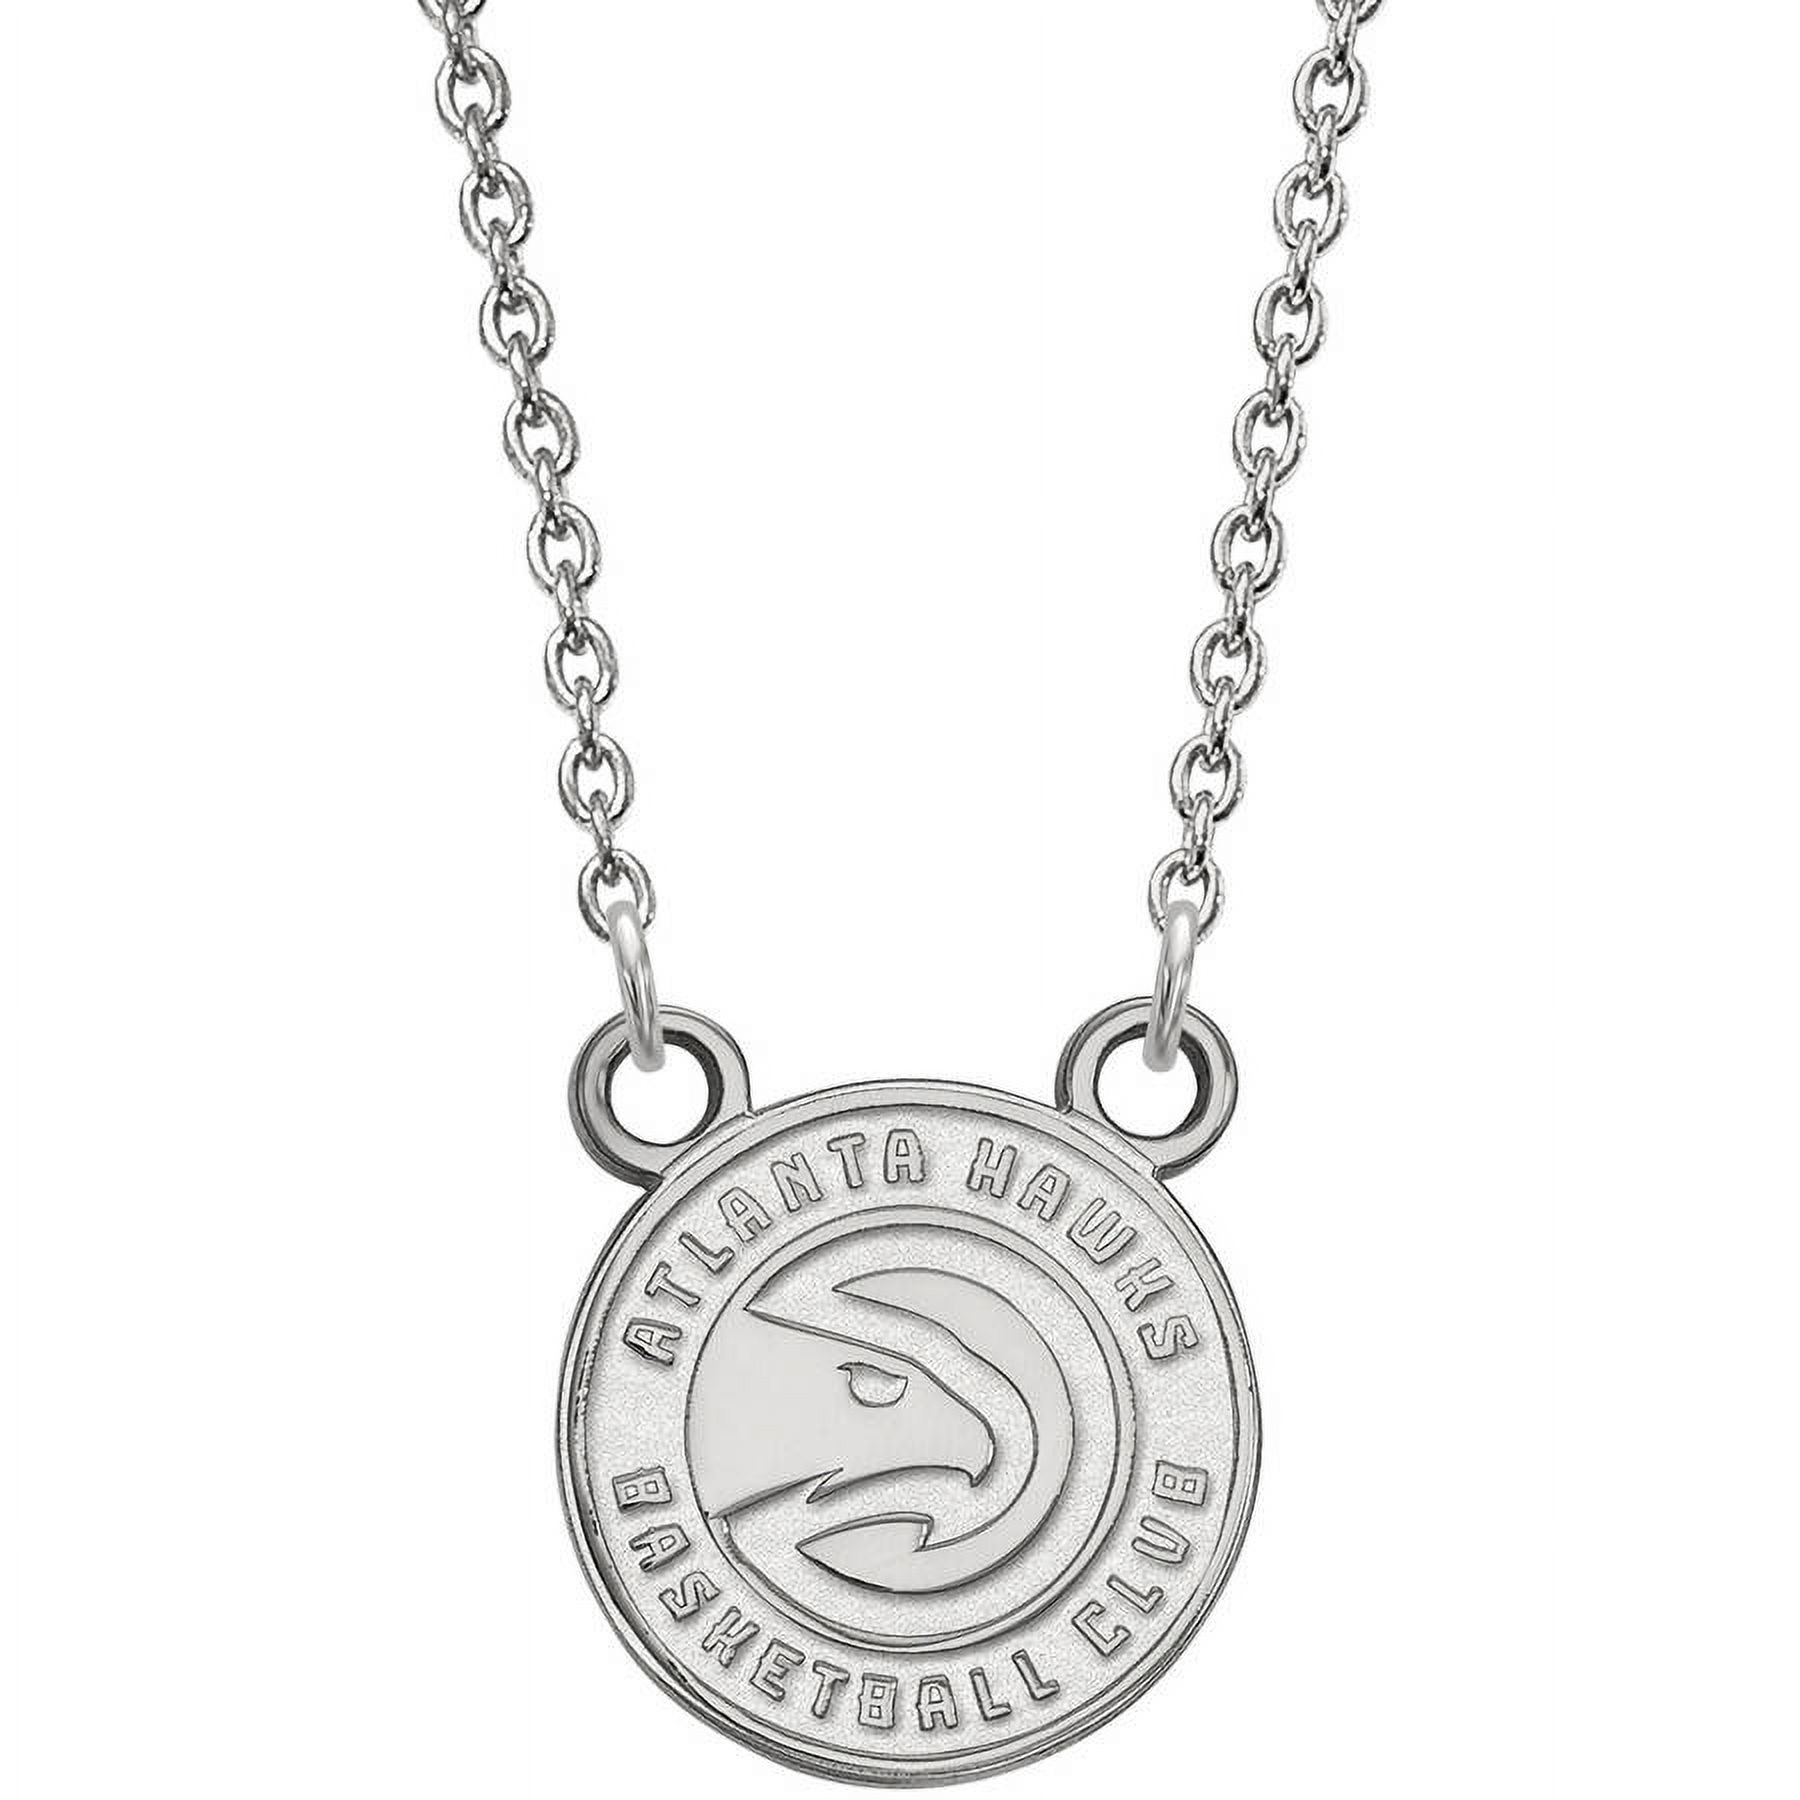 LogoArt 10 Karat White Gold NBA Atlanta Hawks Small Pendant with Necklace - image 1 of 5